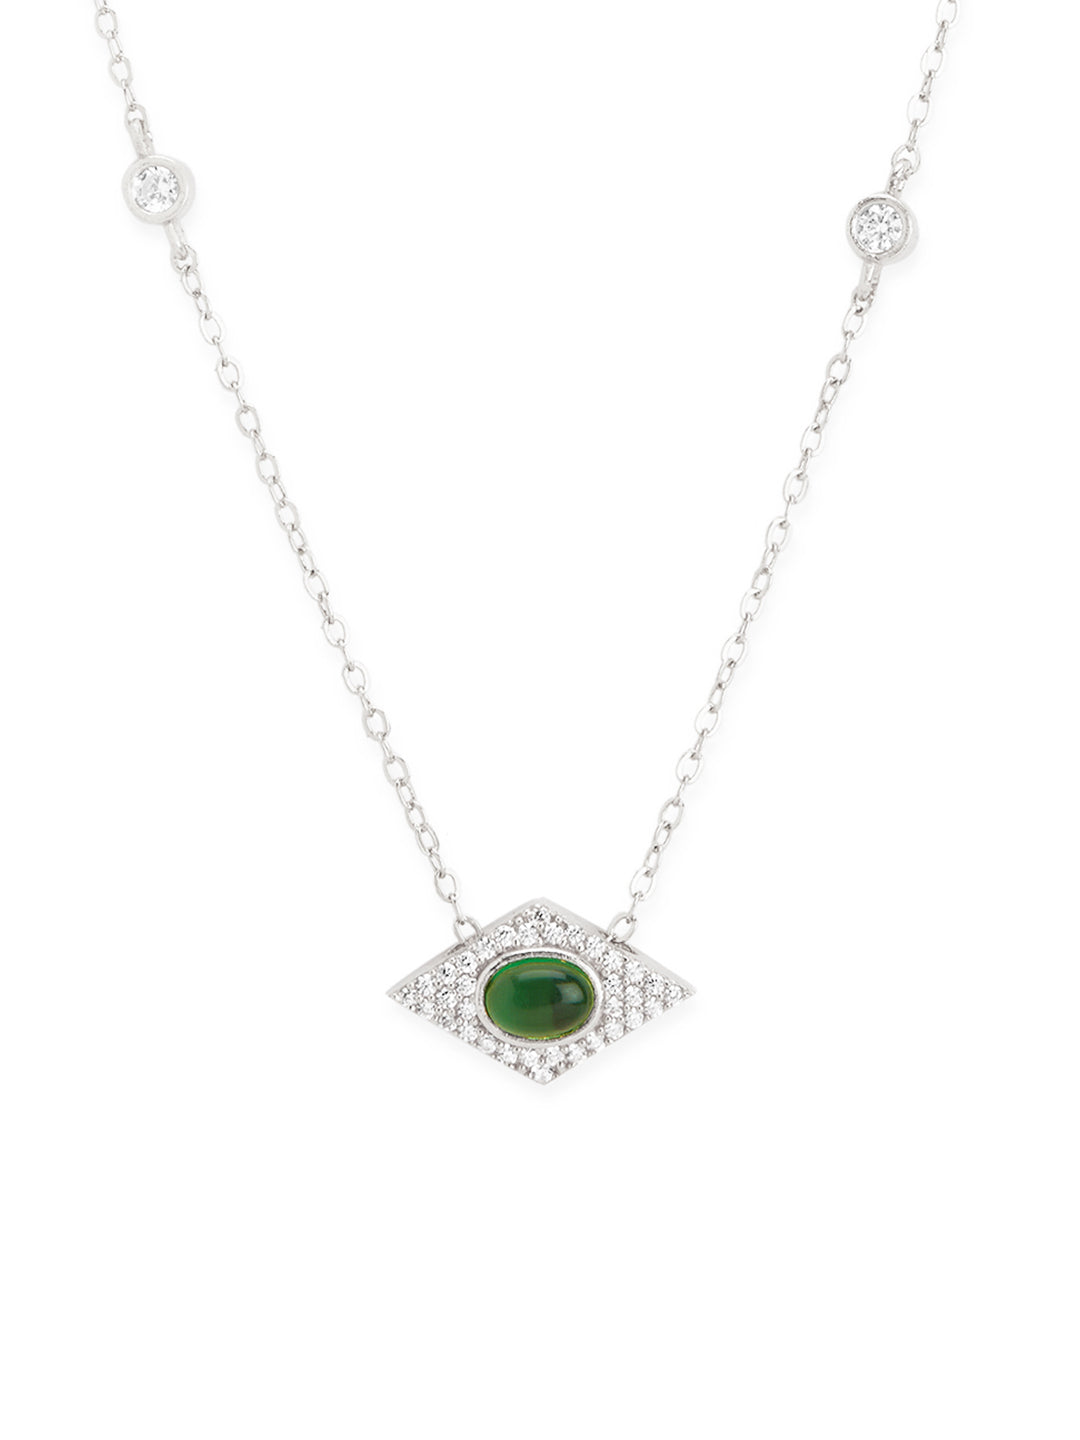 Green Cabachon Pendant Necklace